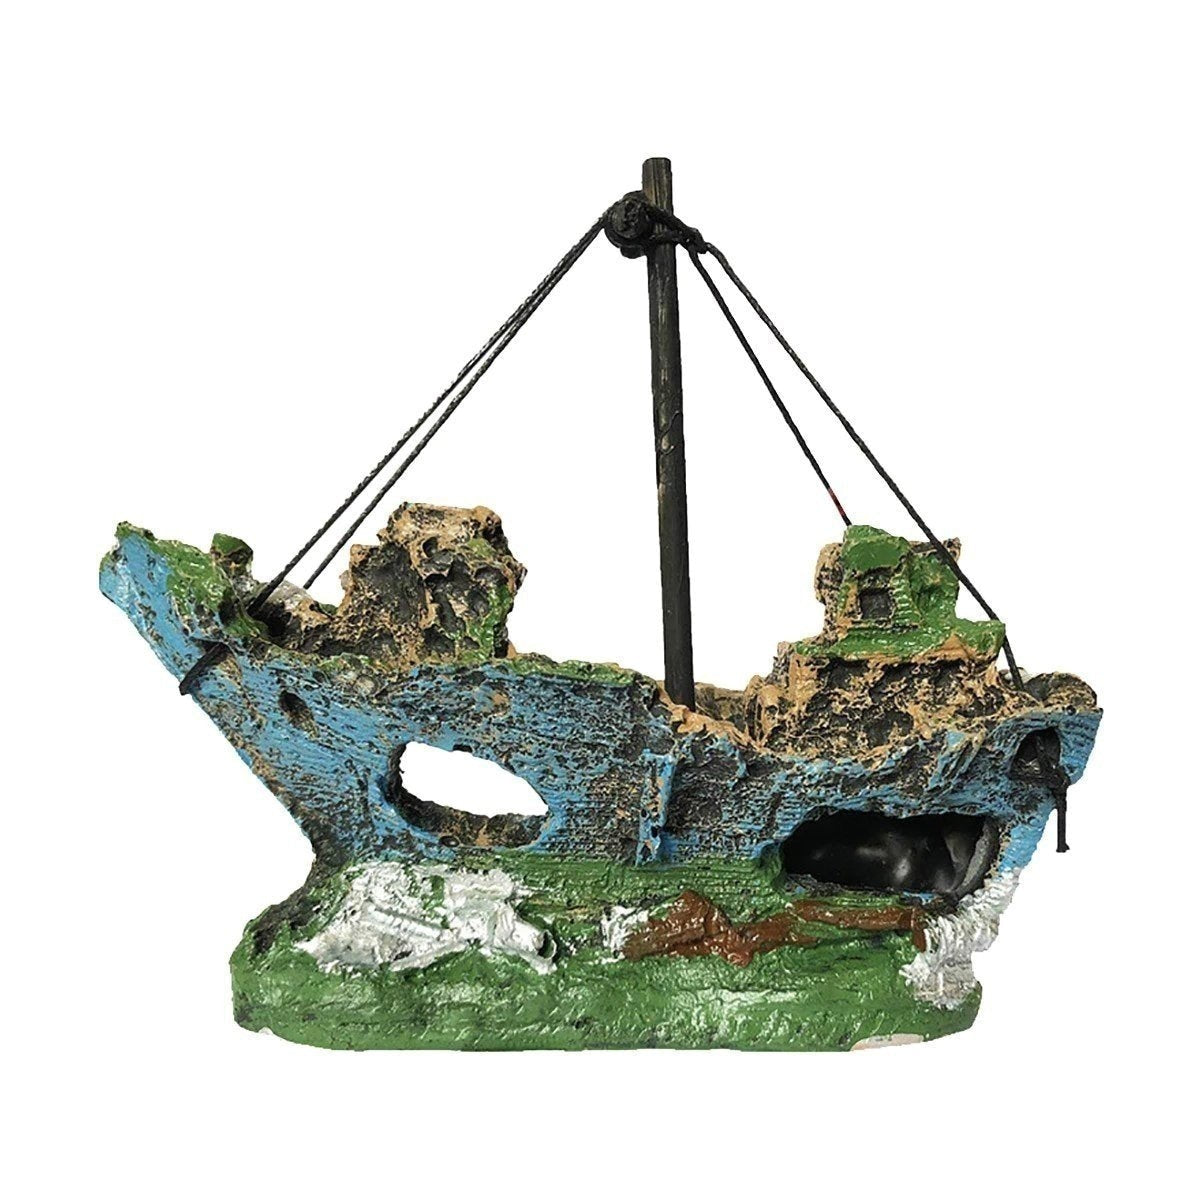 Resin Aquarium Fish Tank Decoration Pirate Shipwreck Ship Wreck Boat Model A Toys And Educational